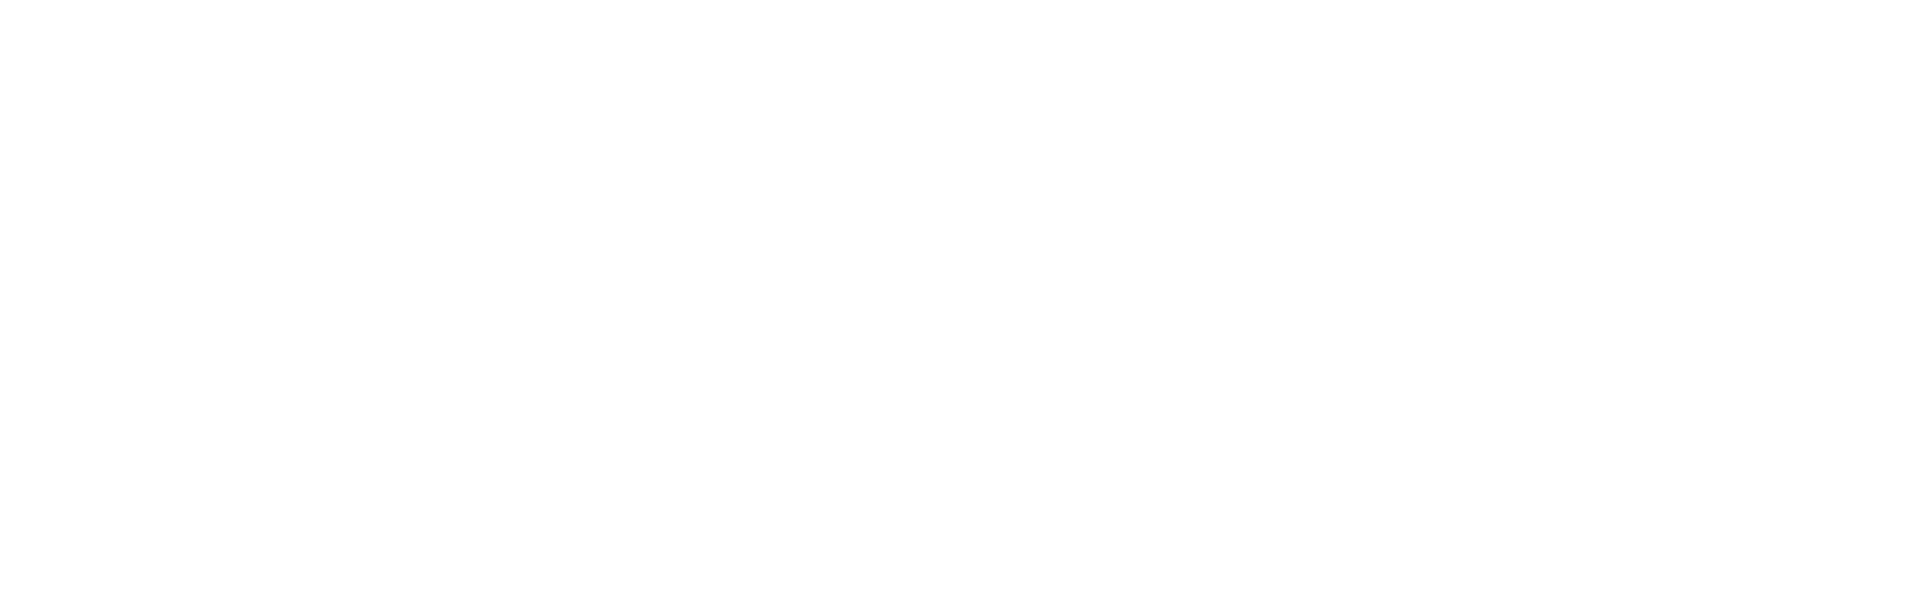 elevation white logo